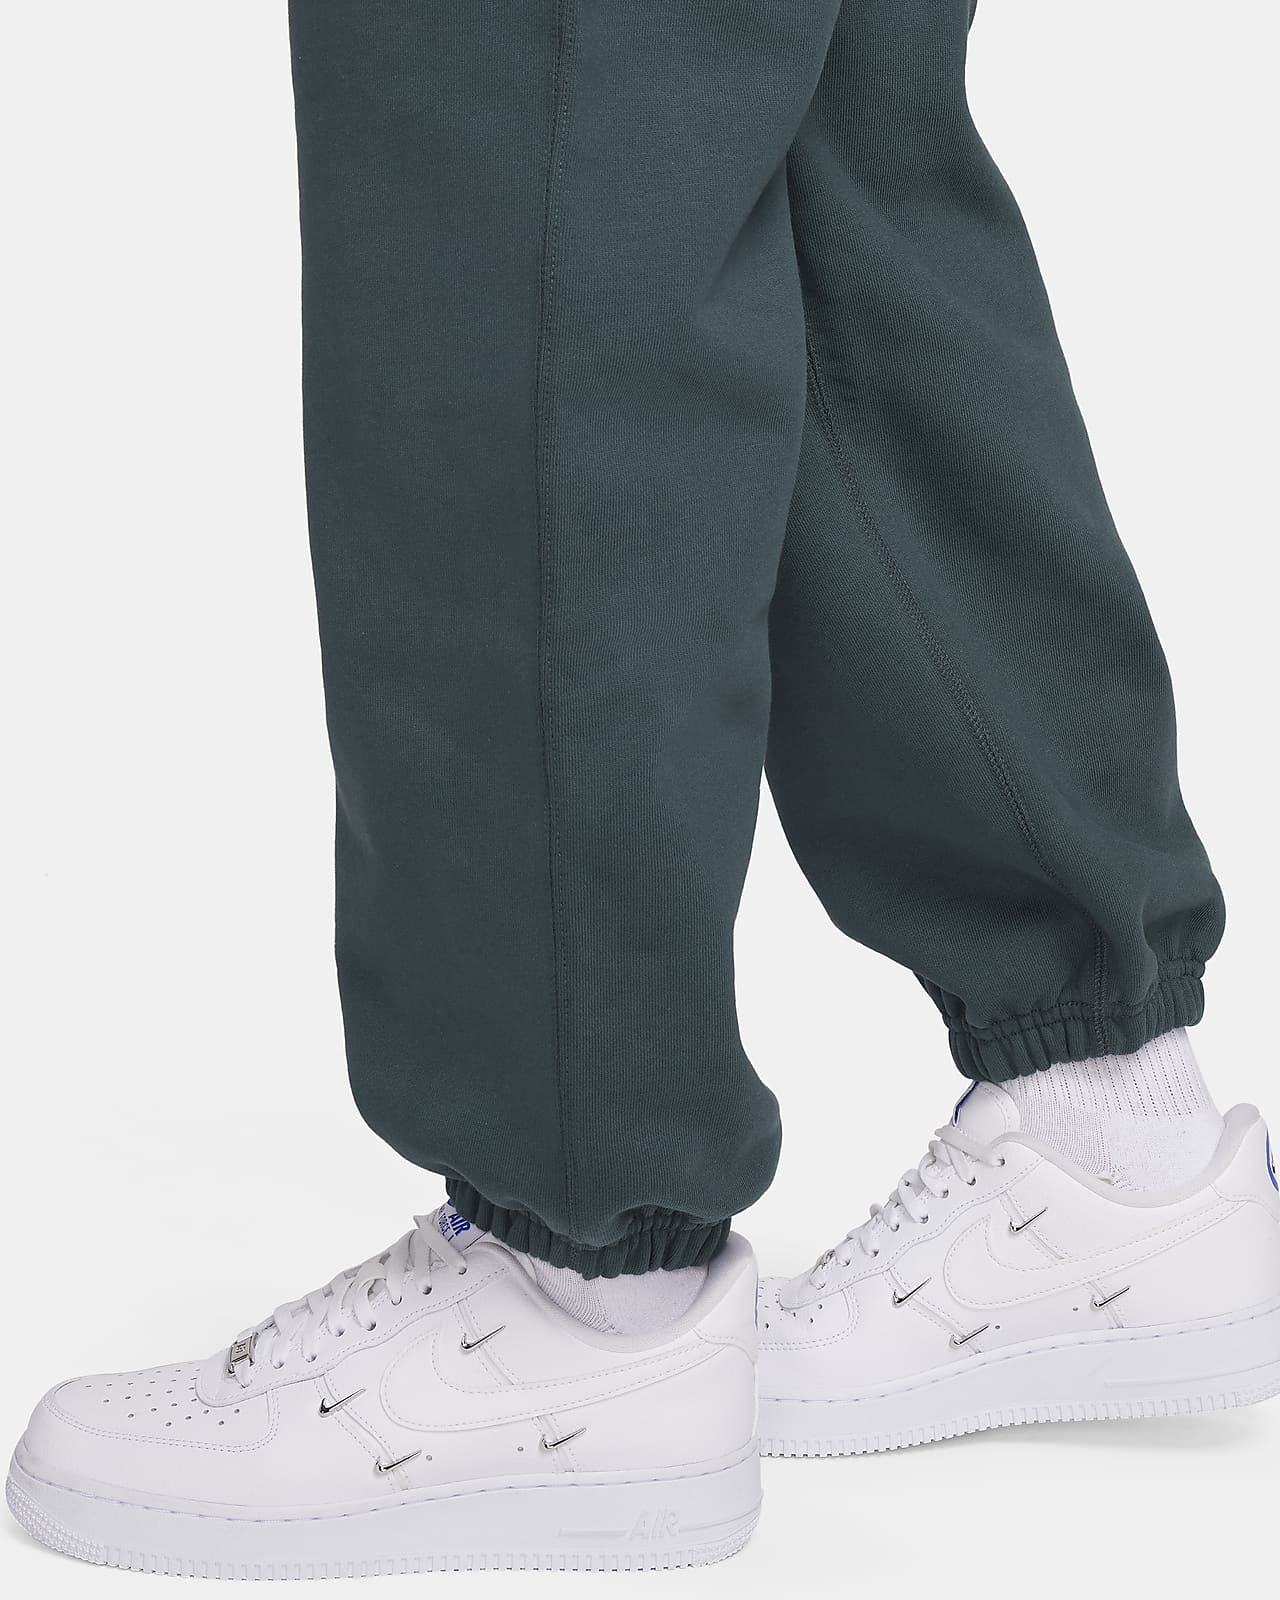 Nike Solo Swoosh Fleece Pants - Cw5460-441 - Sneakersnstuff (SNS)